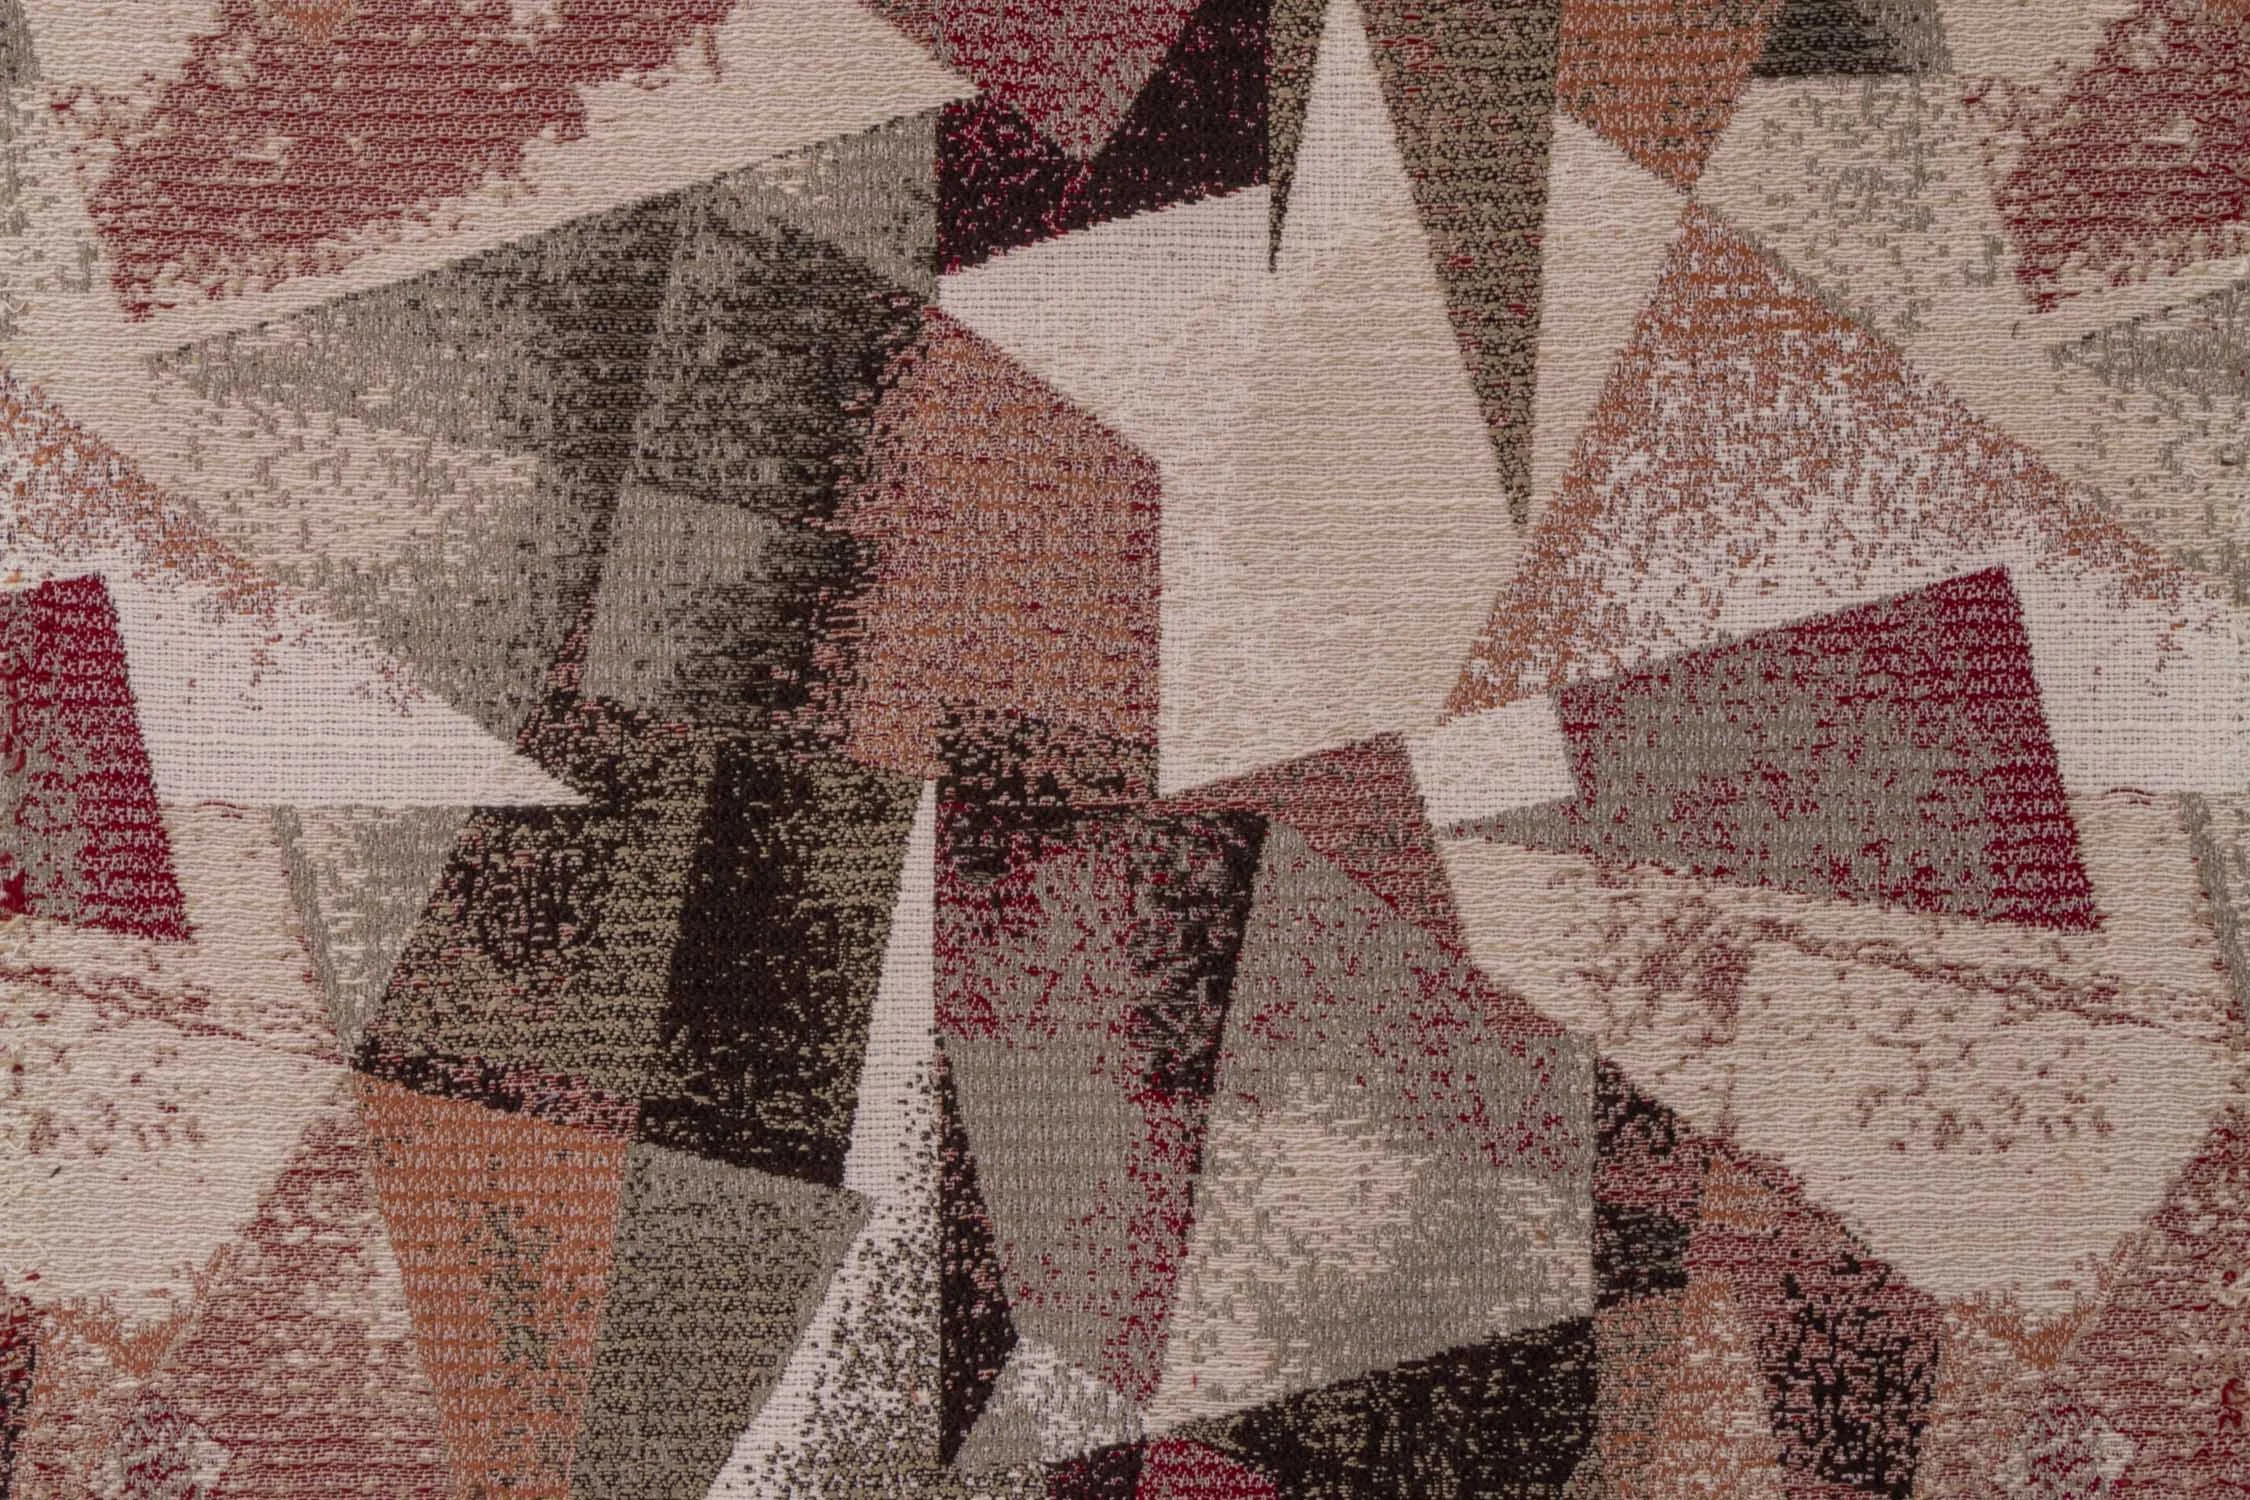 Sofa fabric abstract